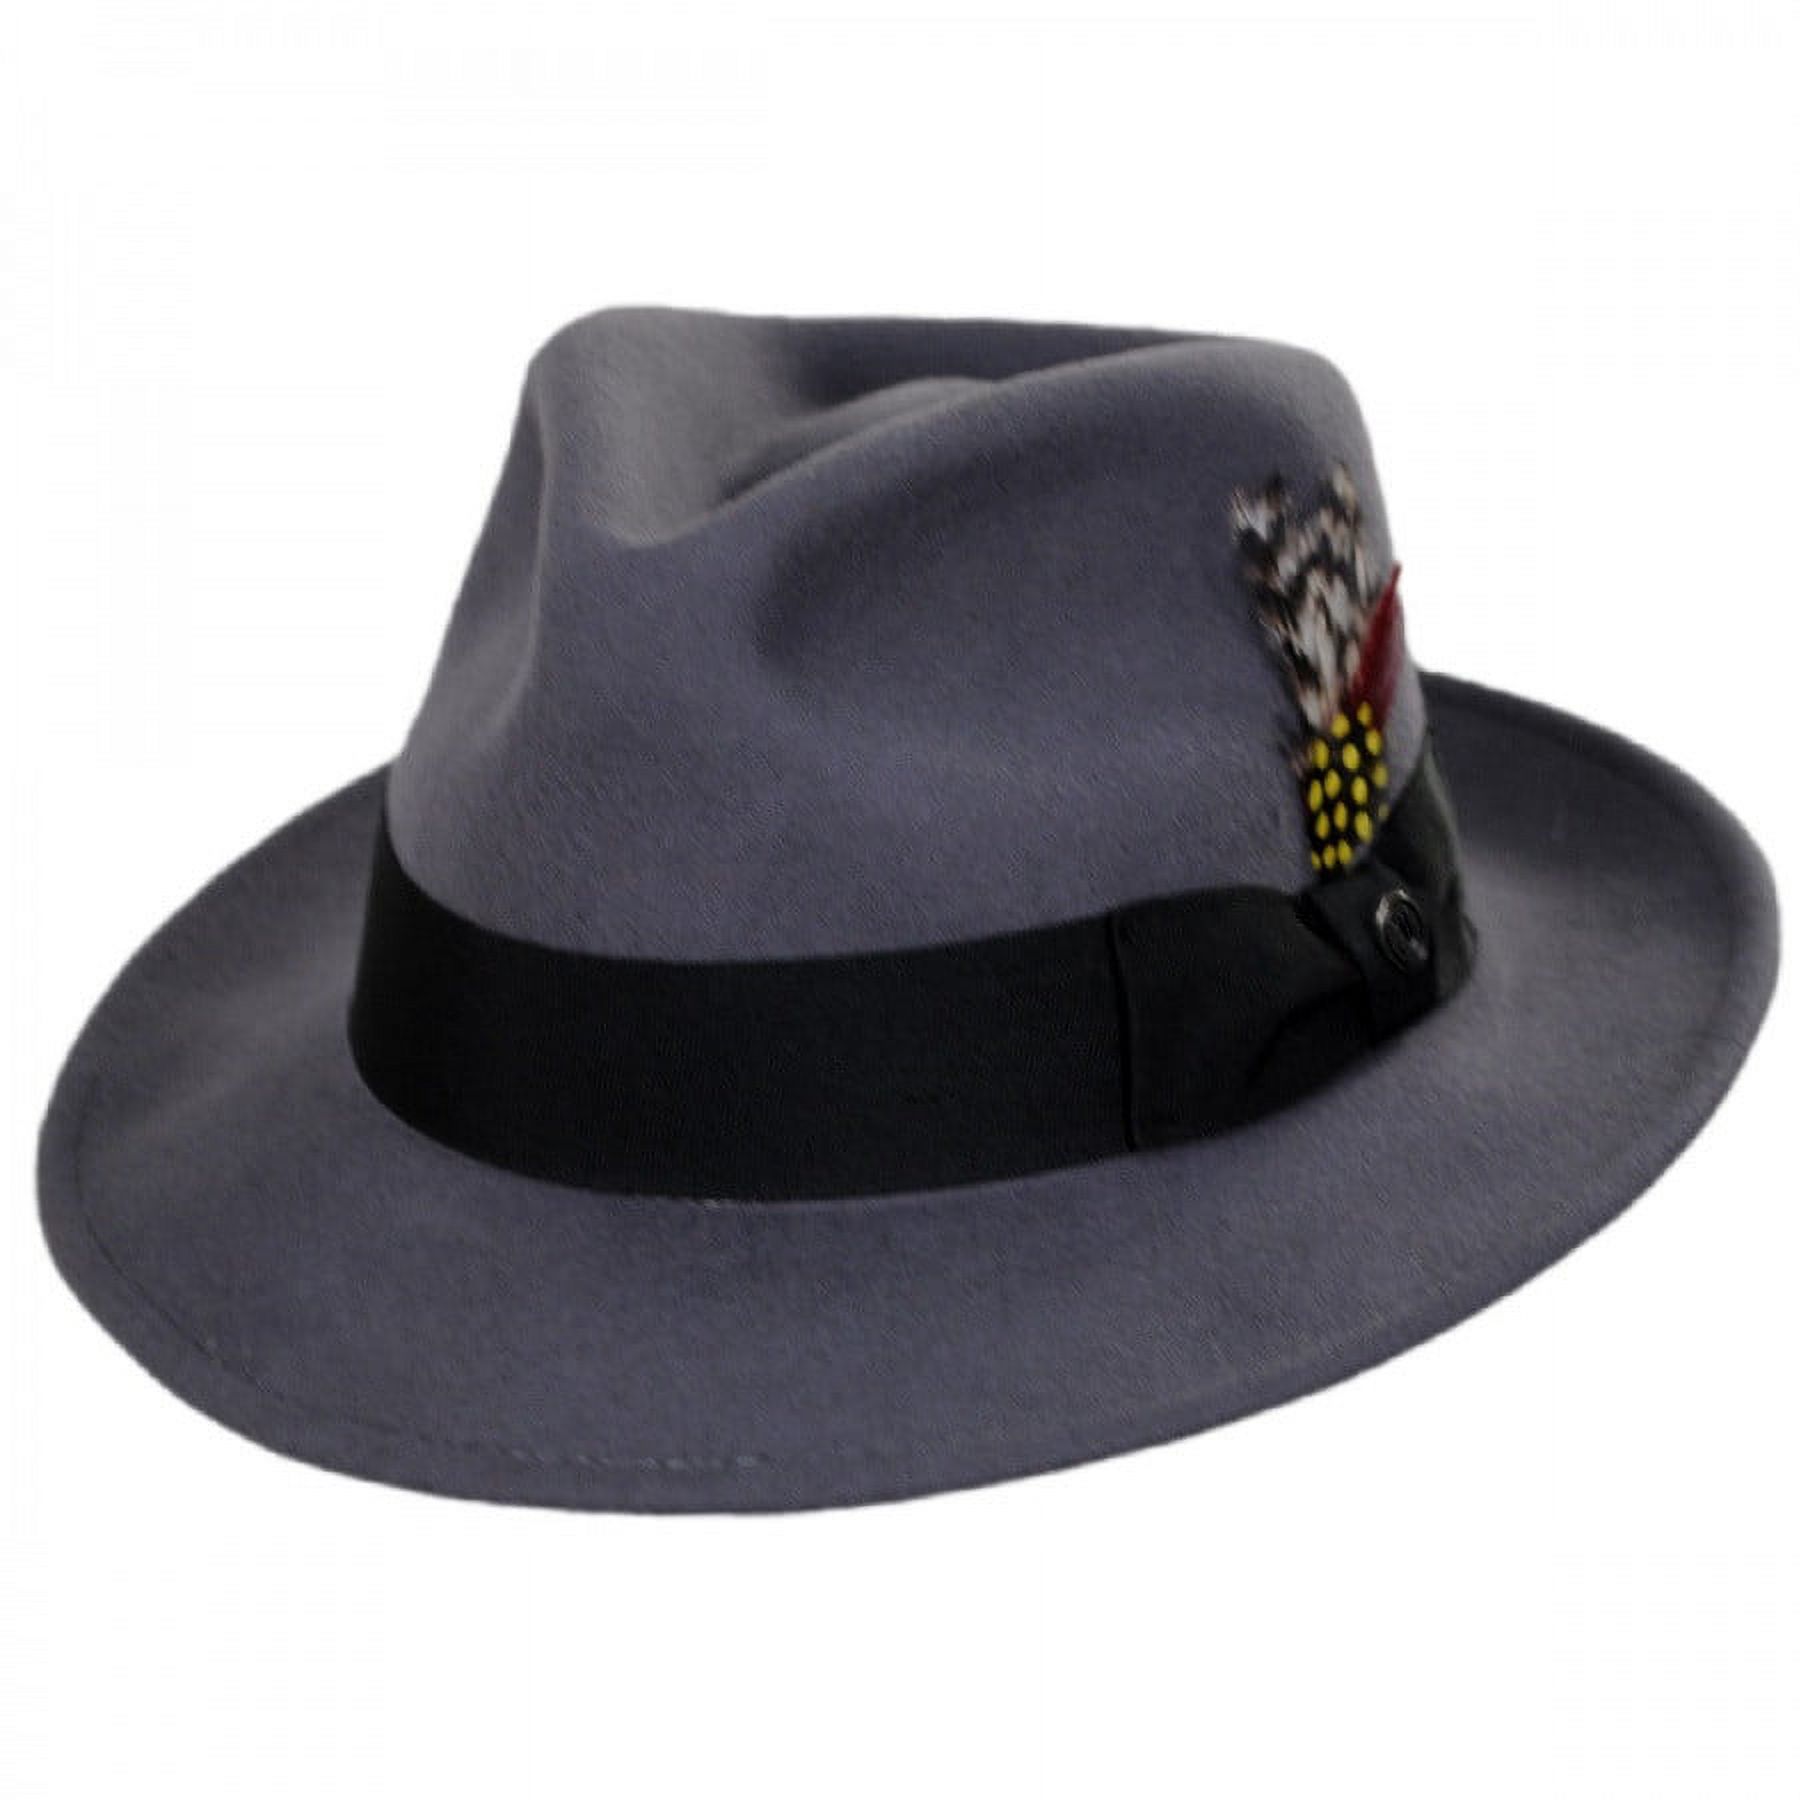 C-Crown Crushable Wool Felt Fedora Hat - XL - Gray - image 1 of 4